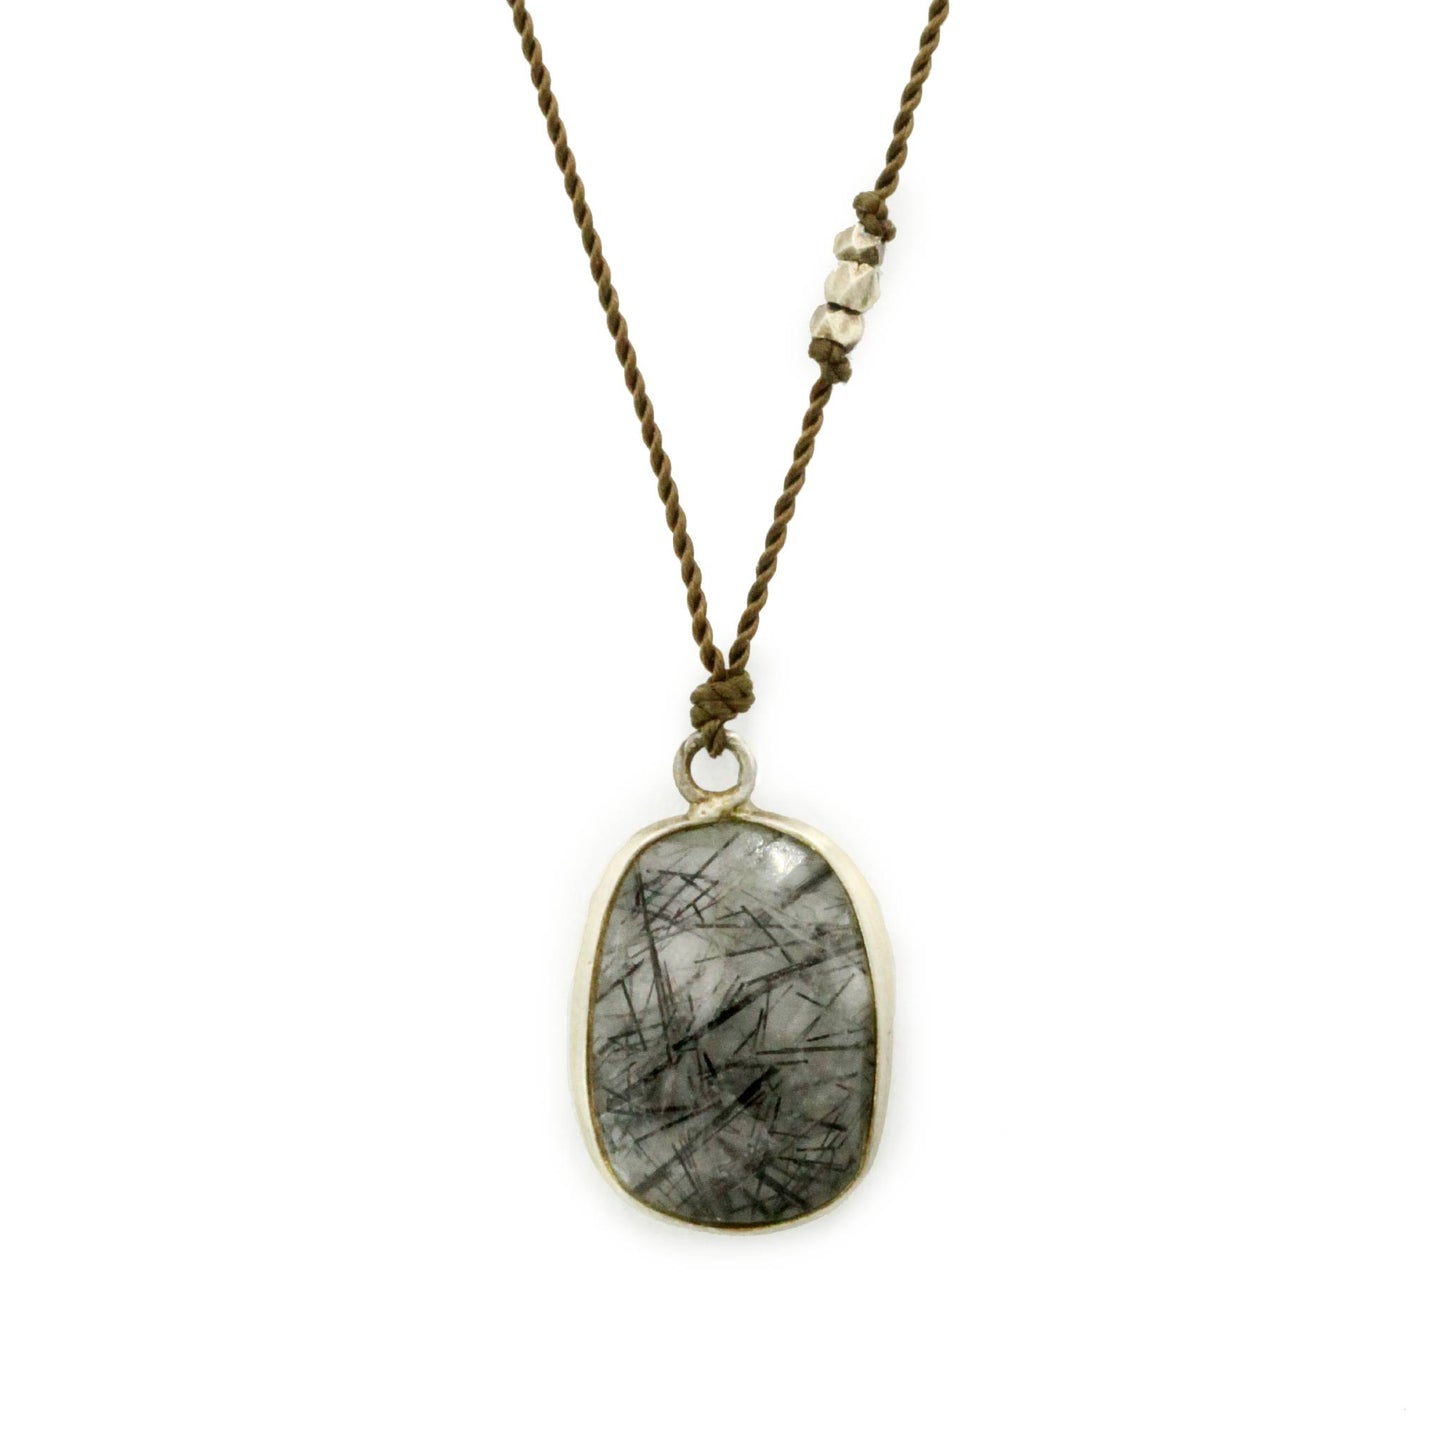 Margaret Solow Jewelry | Tourmalated Quartz + Sterling Silver Drop Necklace | Firecracker